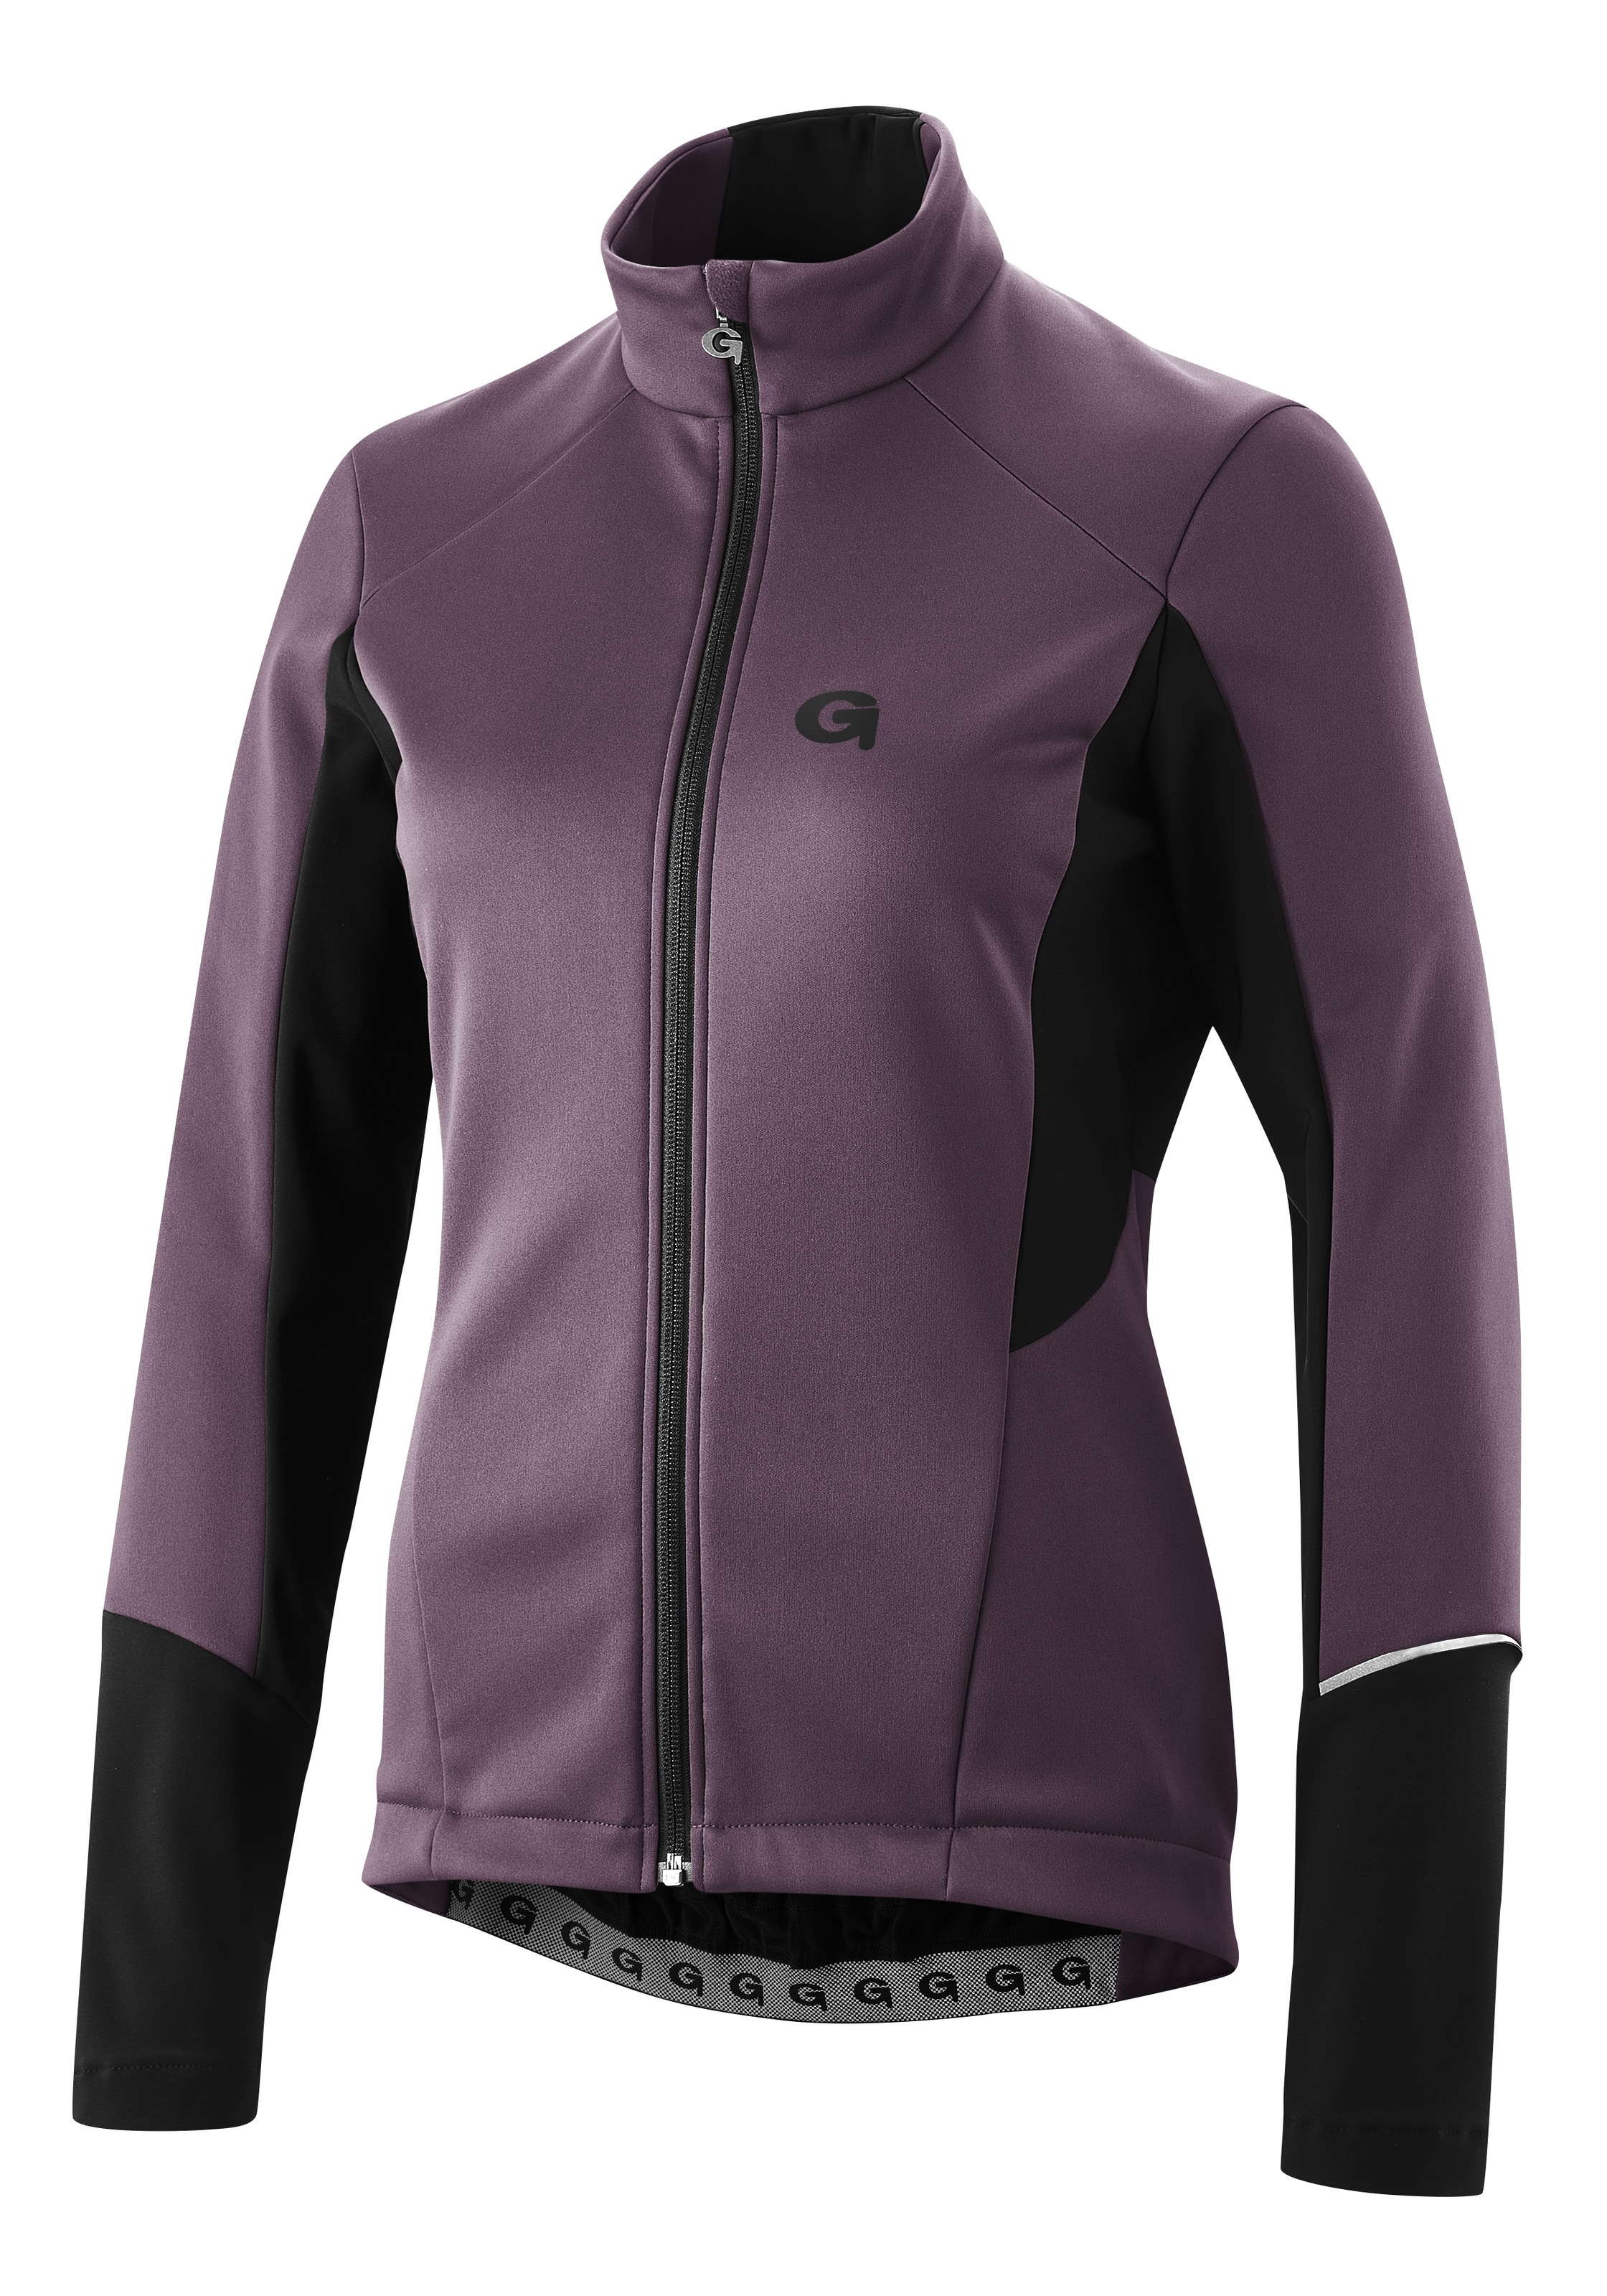 Finde Gonso Fahrradjacke »FURIANI«, wasserabweisend Windjacke Softshell-Jacke, auf Damen atmungsaktiv und